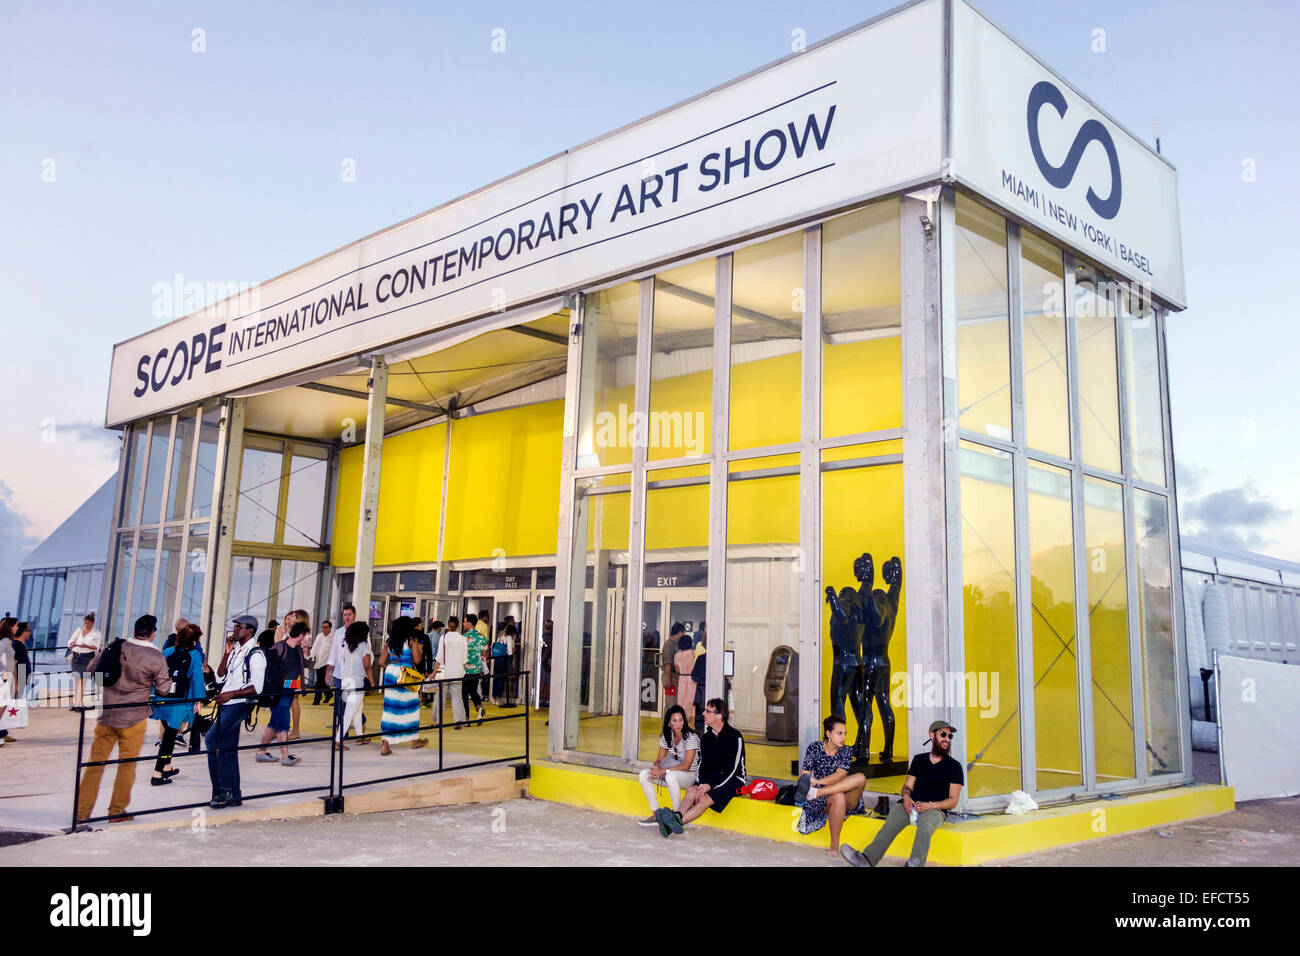 Miami Beach Florida, Scope International Contemporary Art Show, Art Basel Satellite fair, Vorderseite, Eingang, FL141205024 Stockfoto